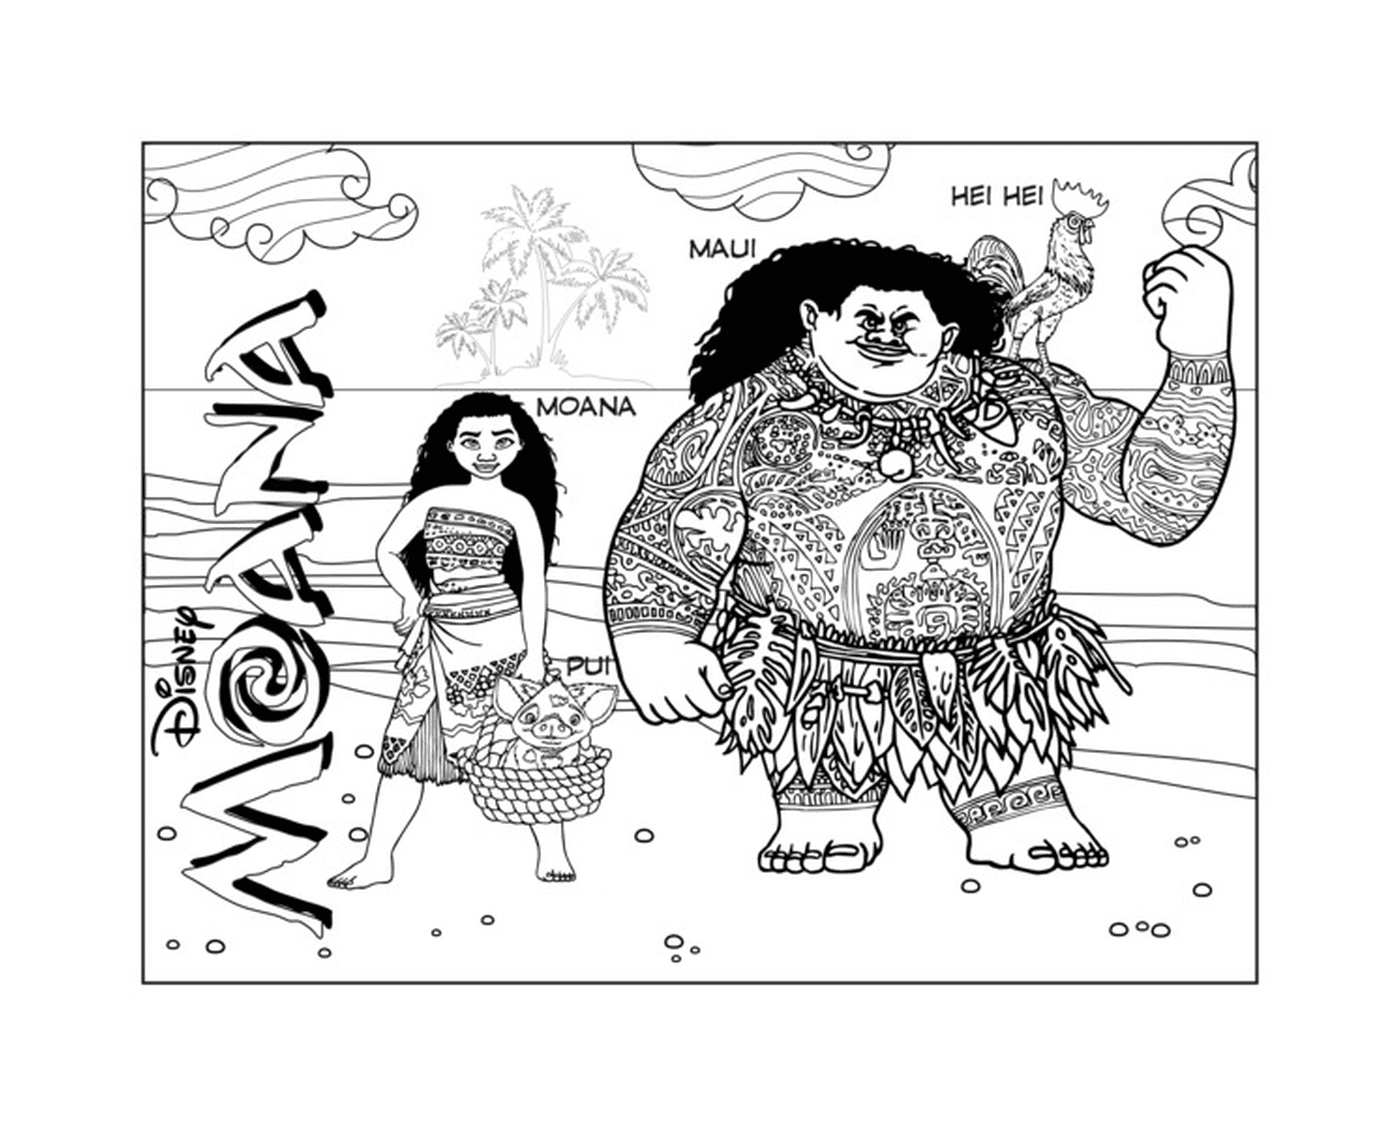  Moana 和 Maui, 探险家 duo 